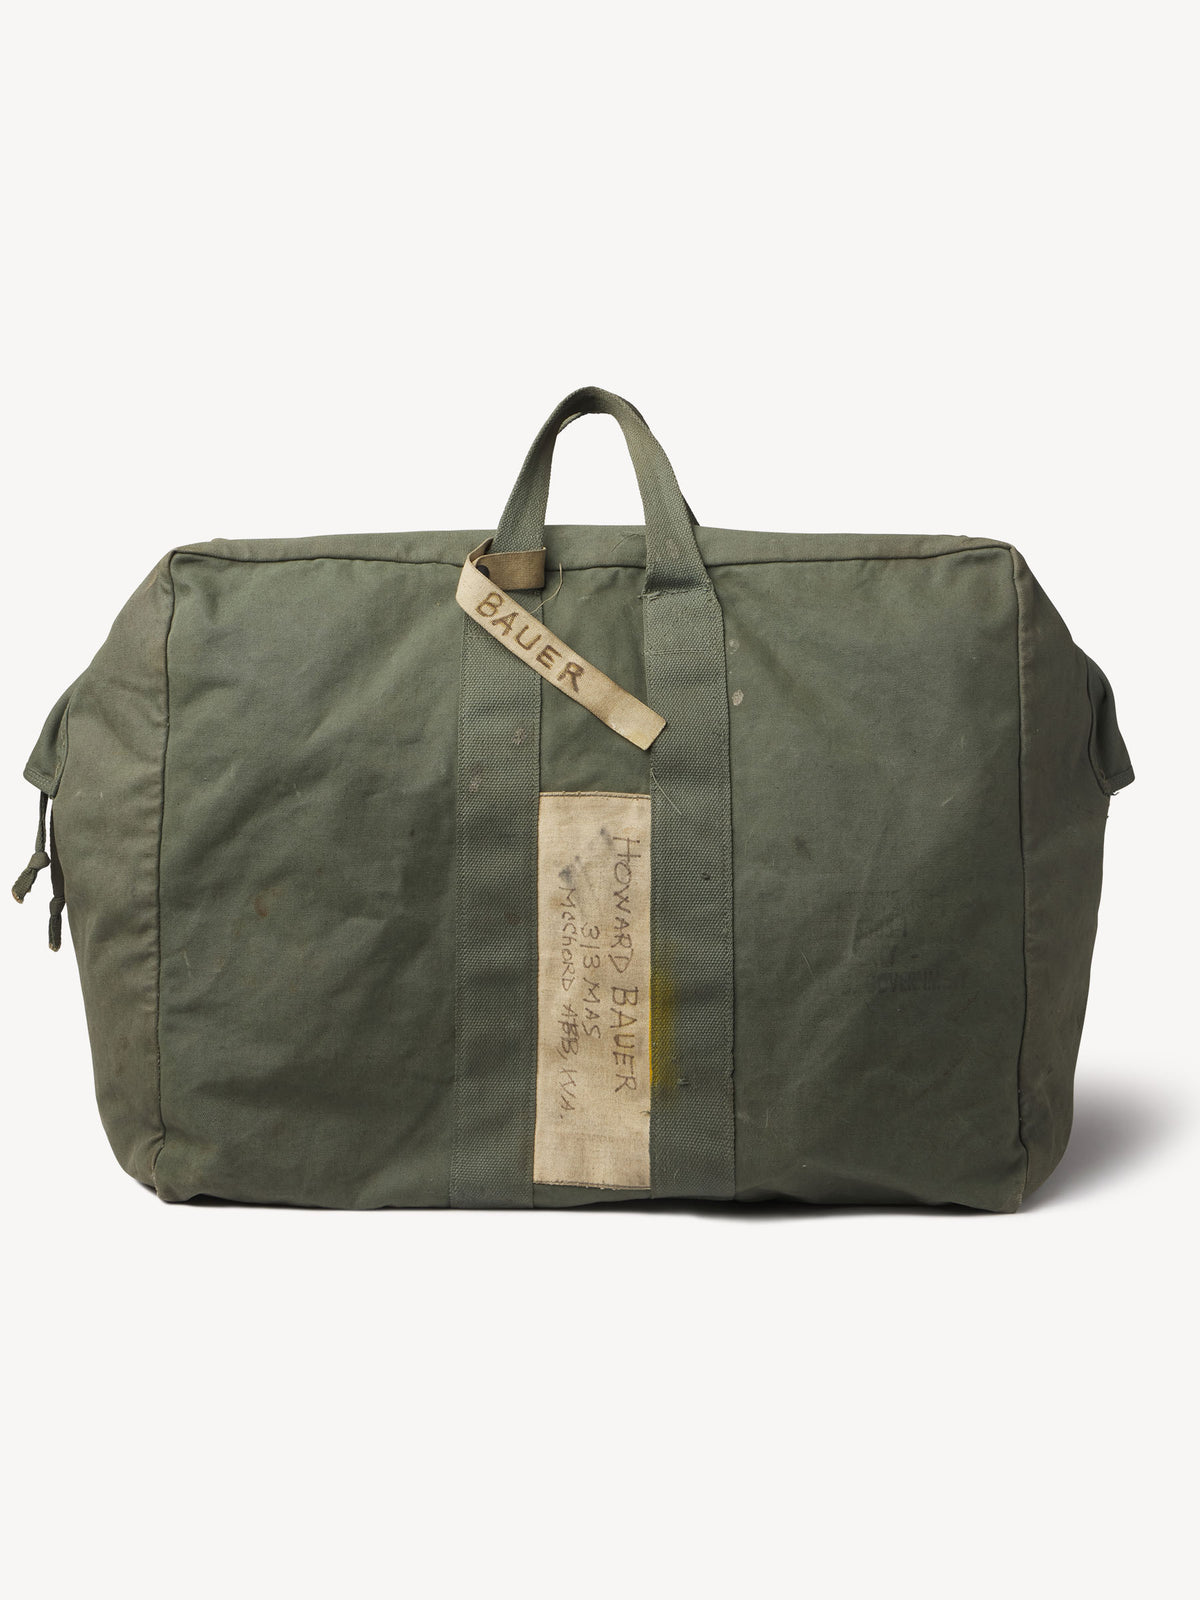 Airforce Kit Bag - 0265 - Product Flat